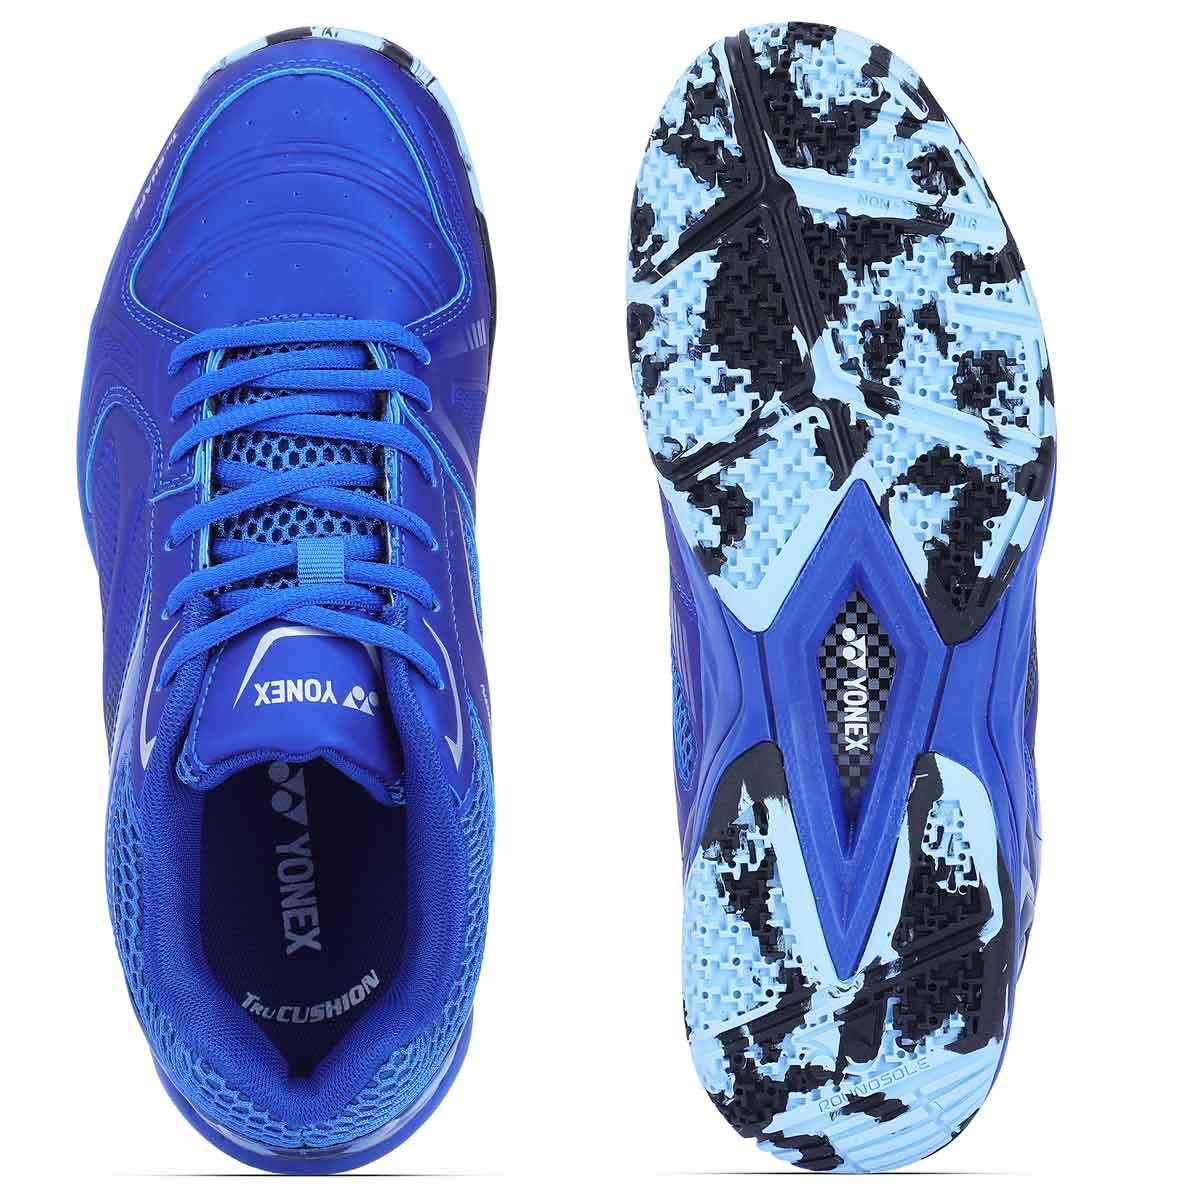 Buy Yonex Akayu Super 5 Badminton Shoes (Navy/Royal Blue) Online India